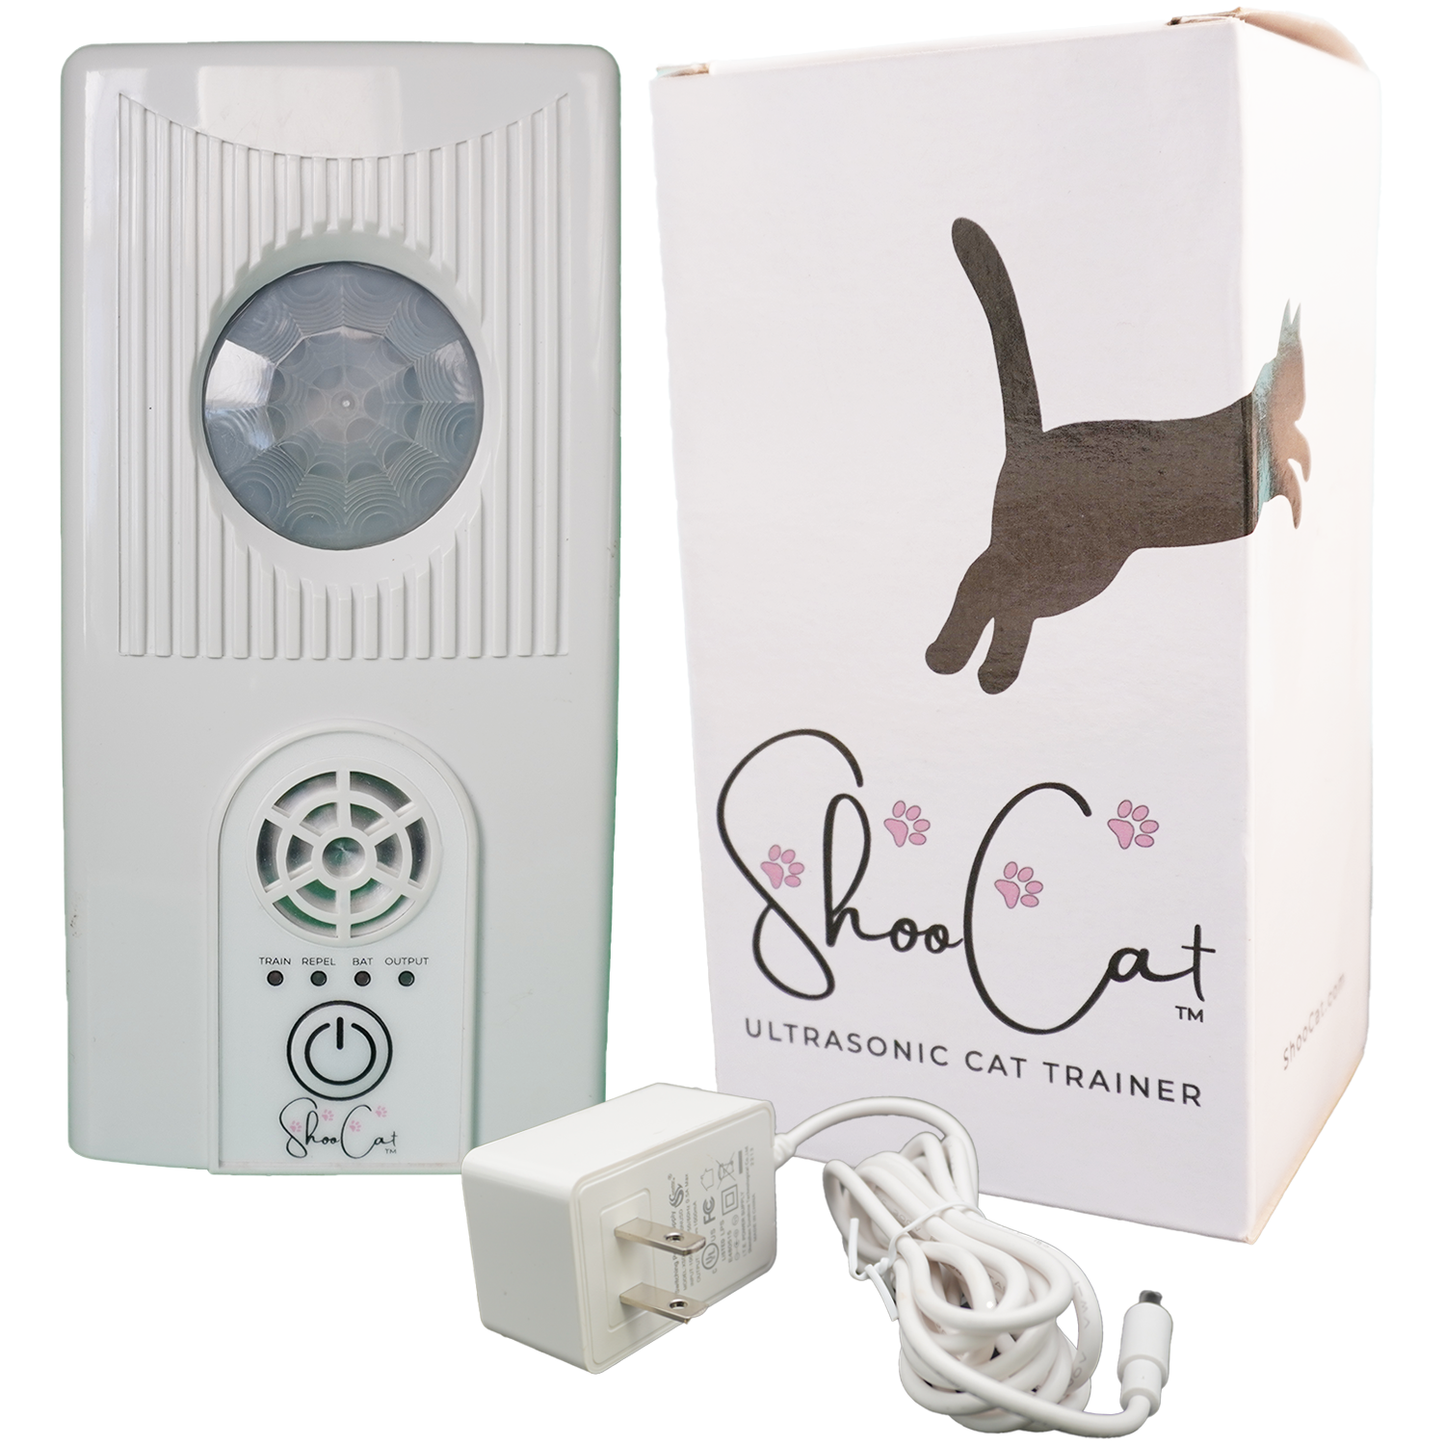 Shoo Cat Ultrasonic Cat Trainer Bundle With Power Adaptor